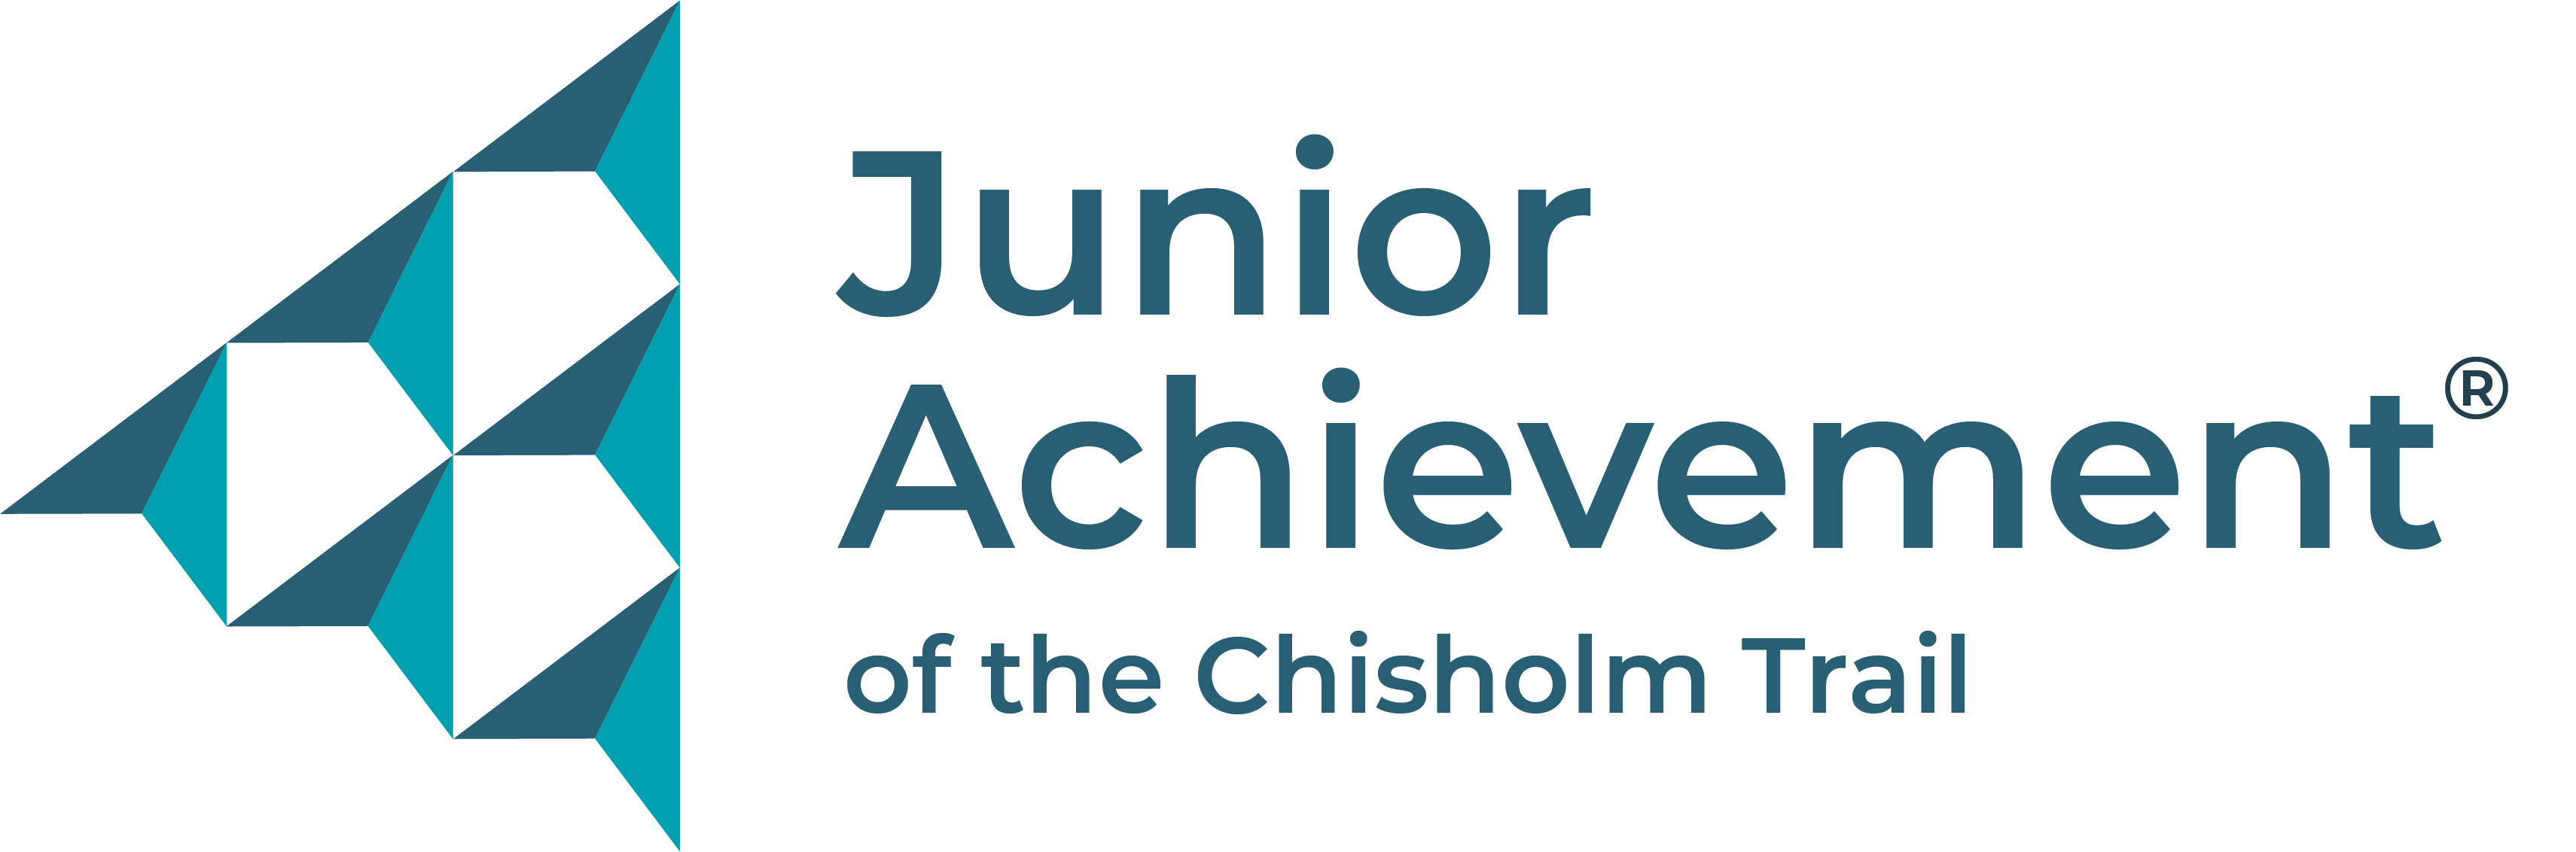 Junior Achievement of the Chisholm Trail, Inc.